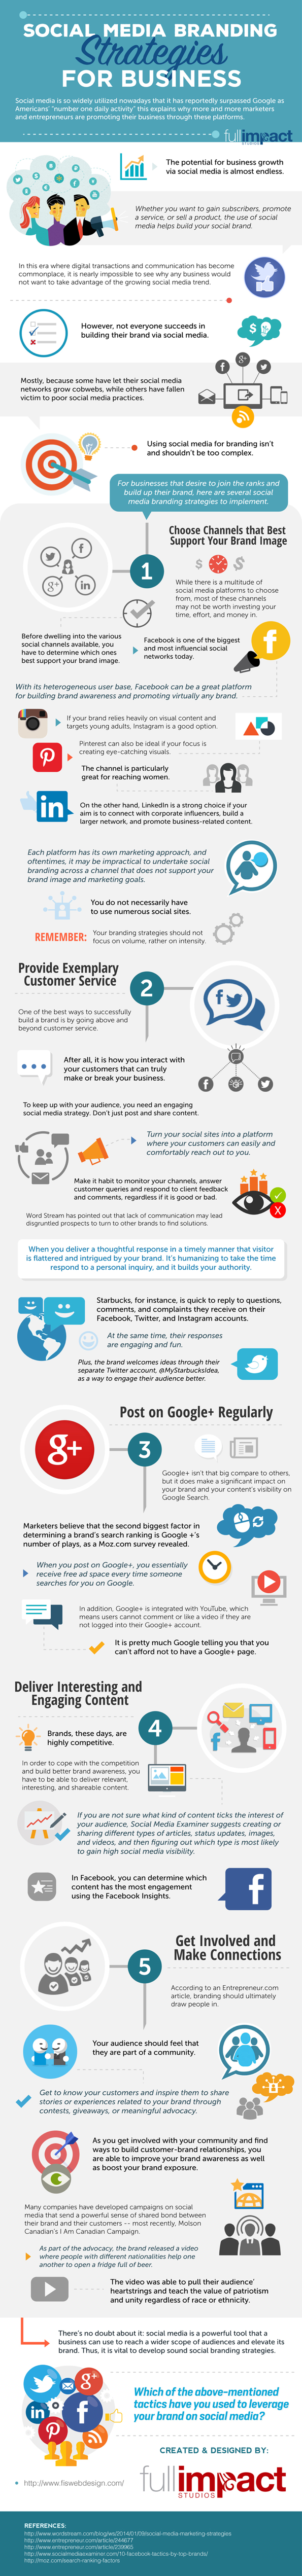 5 Strategies for Social Media Branding Success Infographic image